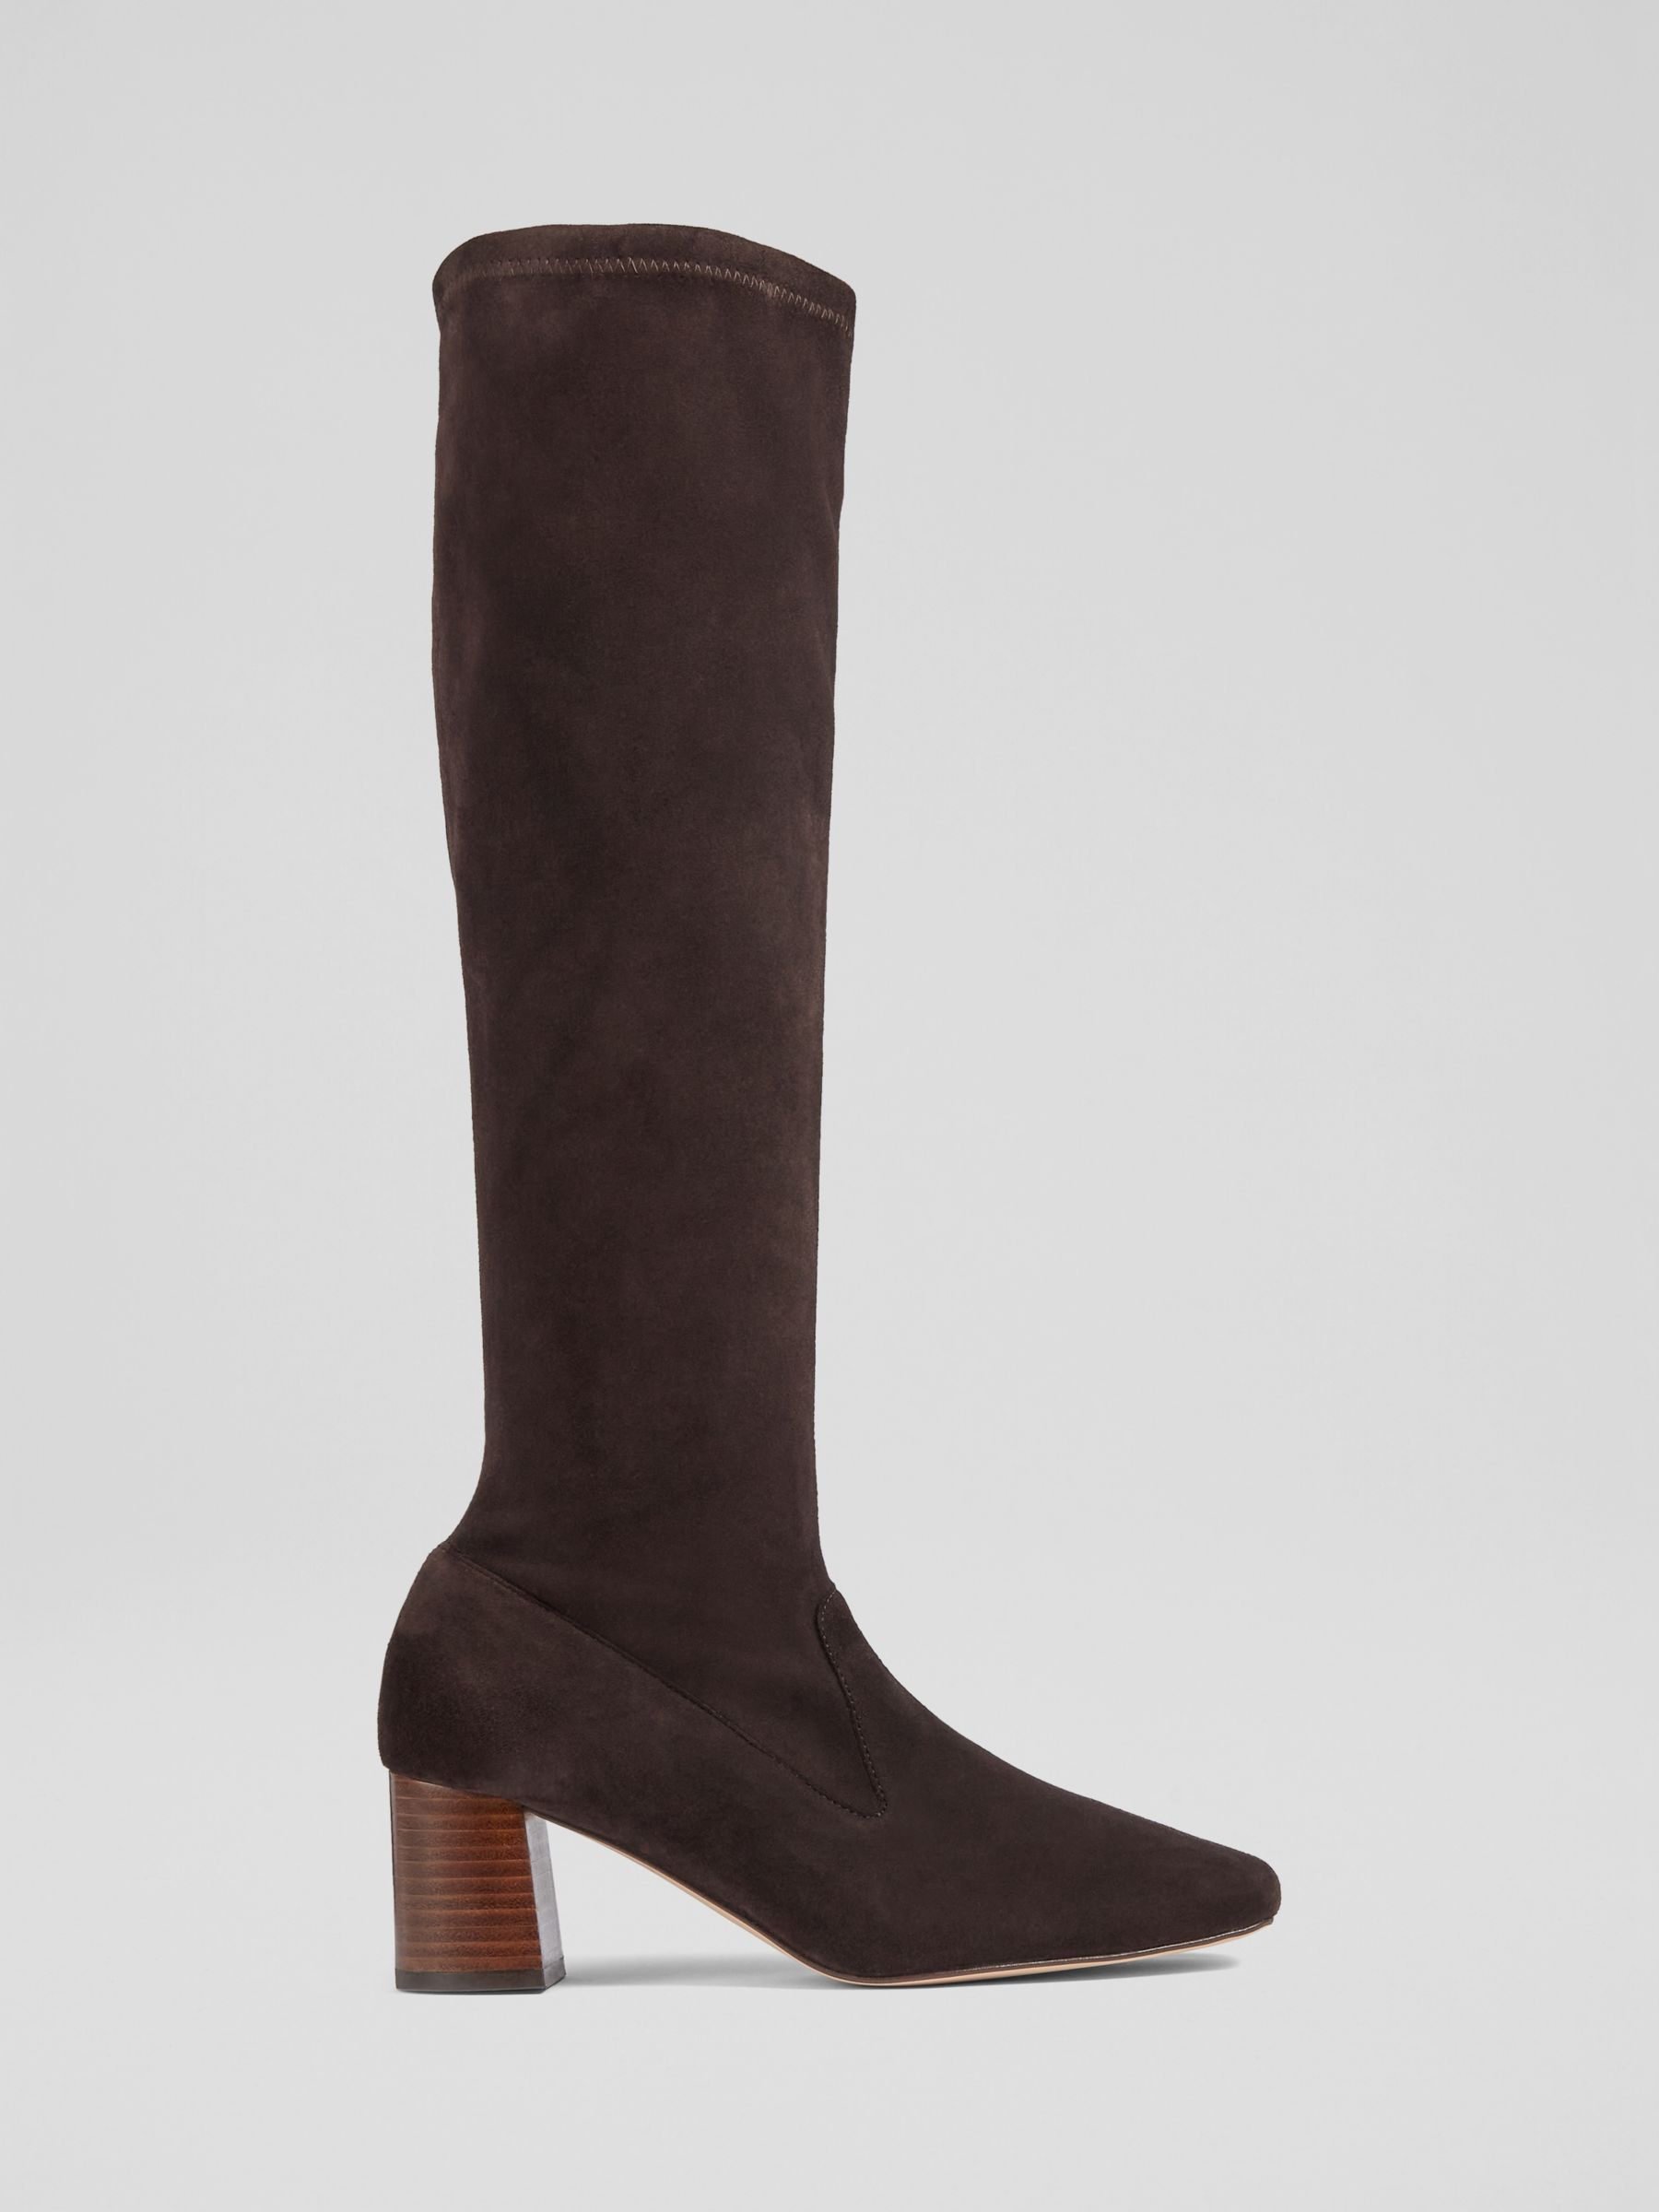 L.K.Bennett Davina Suede Knee High Boots, Chocolate, 5